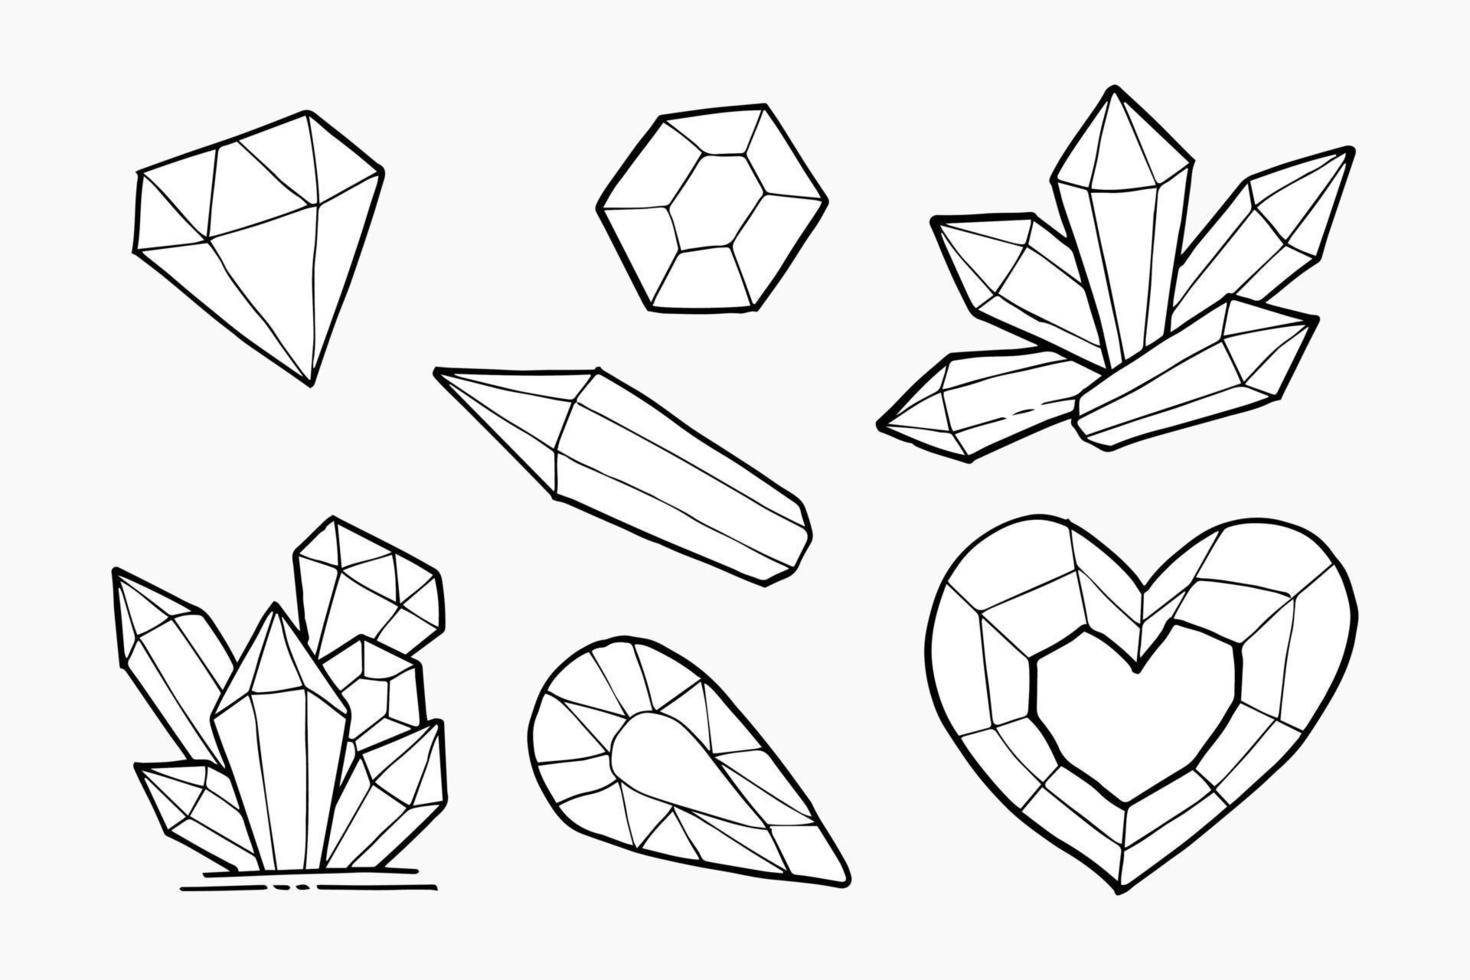 Doodle hand draw diamond set, vector illutration.